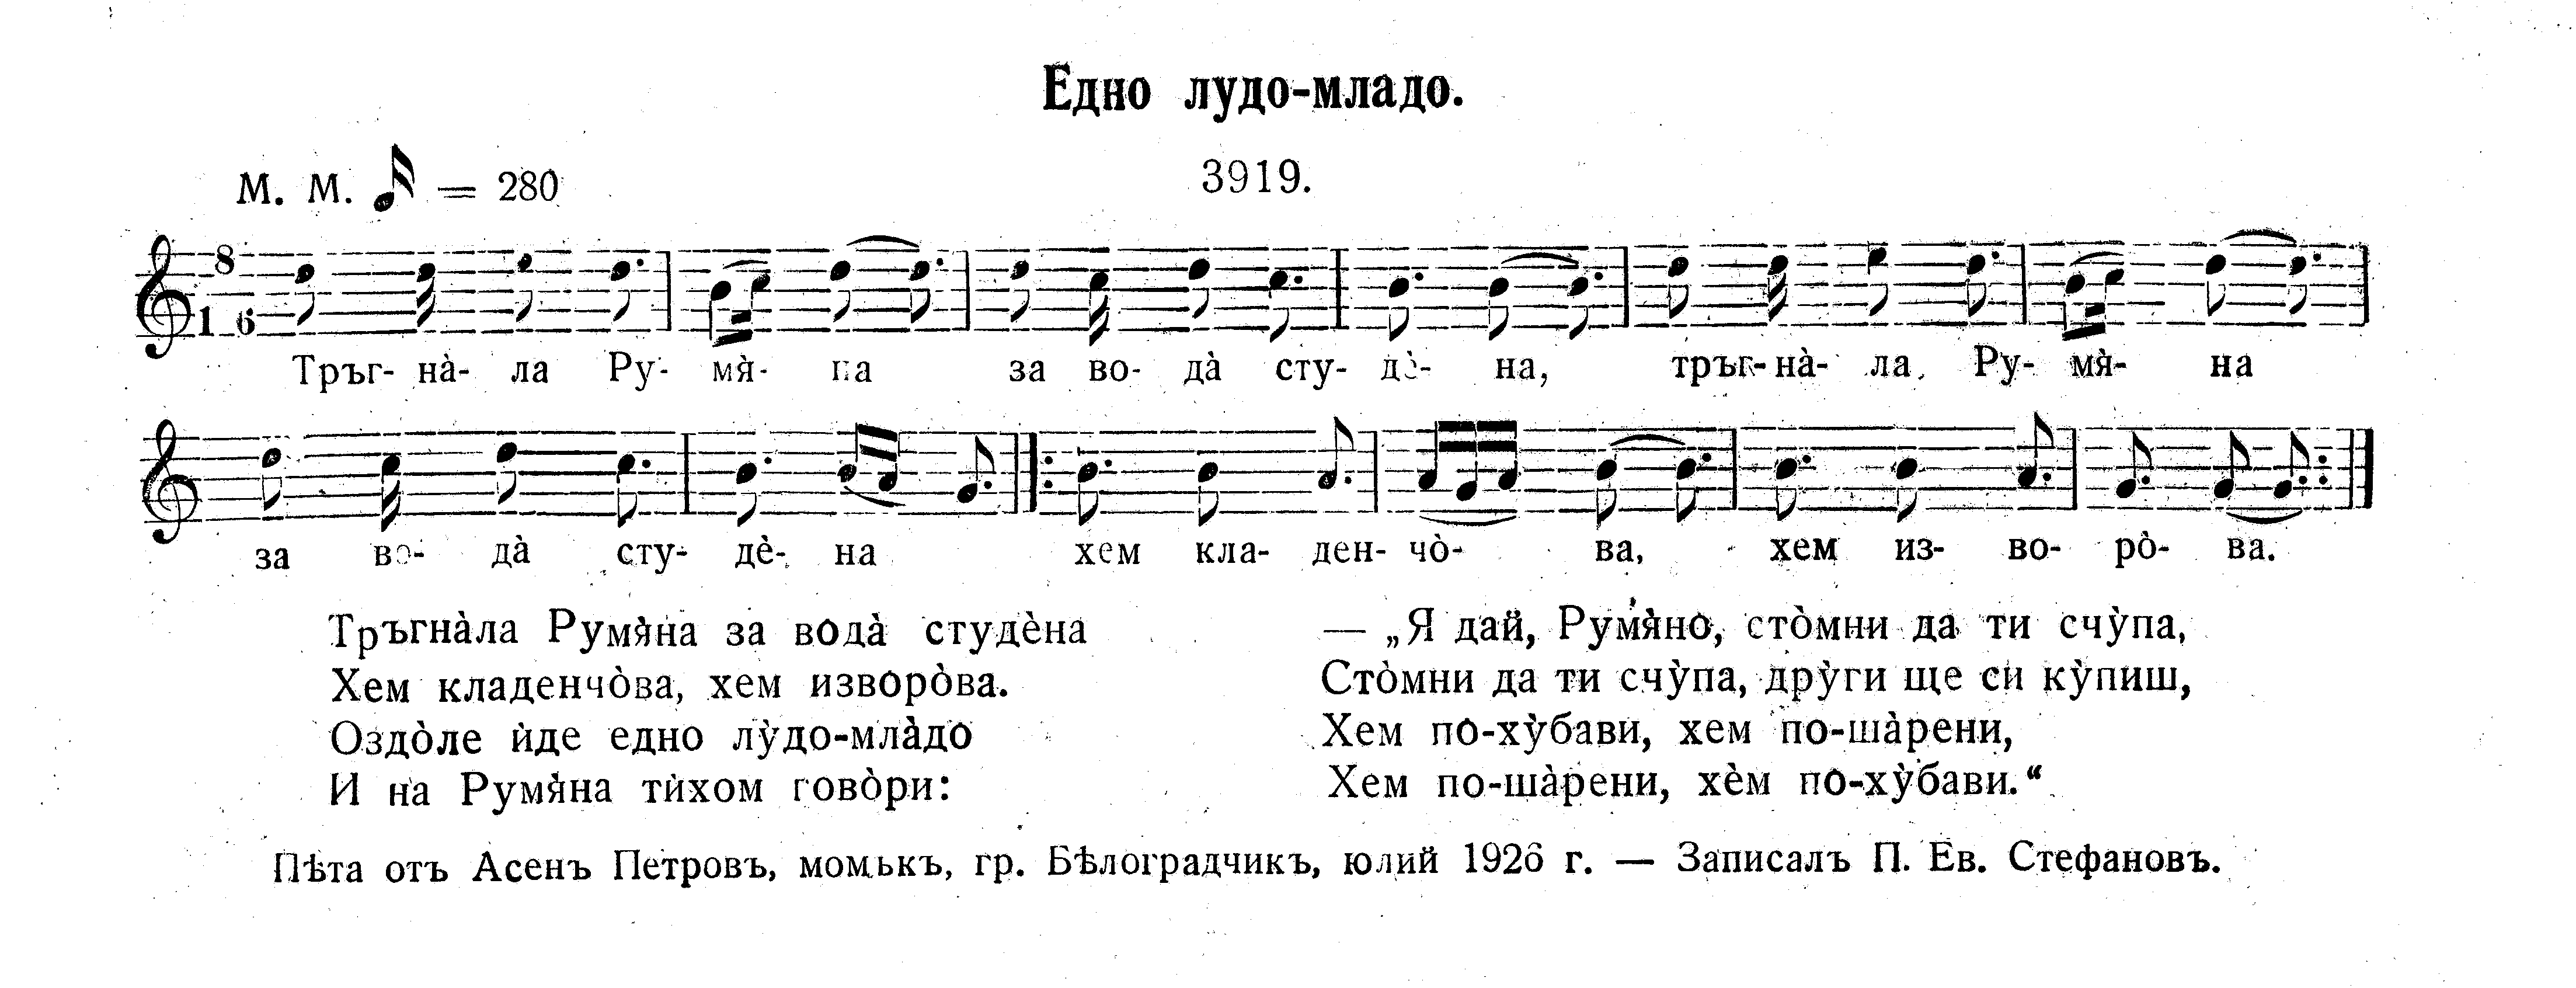 Trăgnala Rumjana aus Belogradčik, aufgezeichnet 1926. Aus: Stoin, Vasil, Narodni pesni ot Timok do Vita (Sofija 1928)